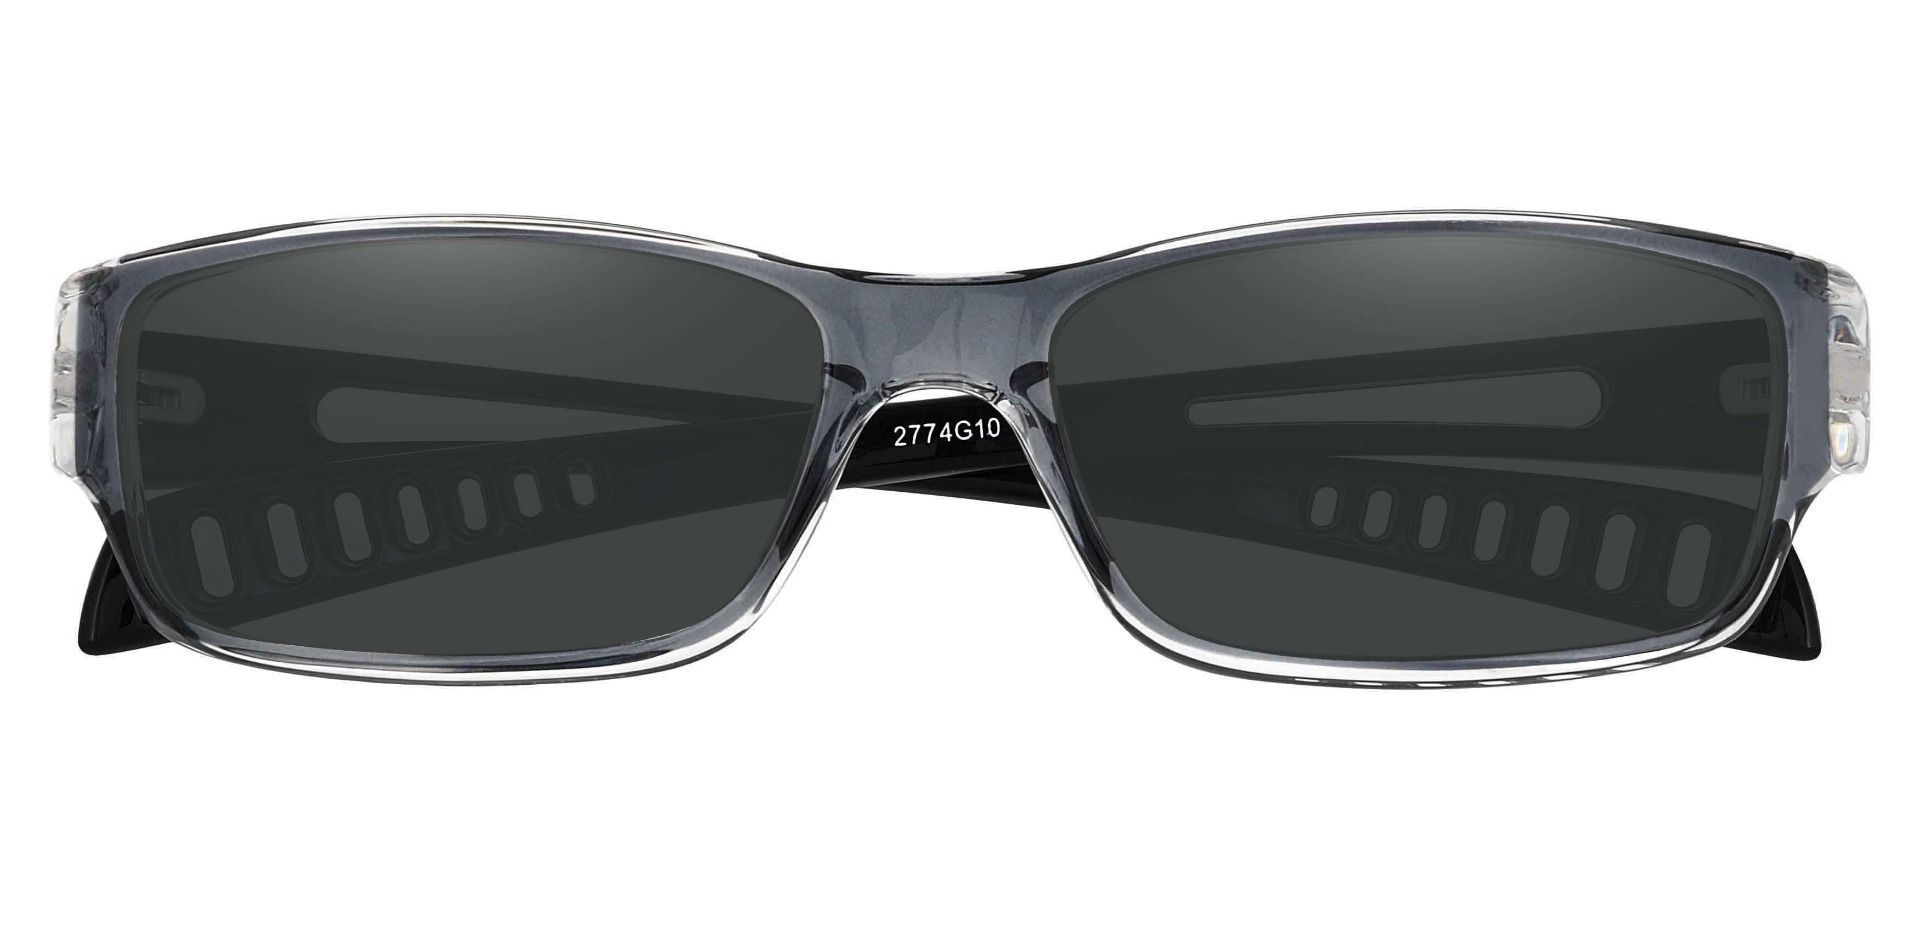 Mercury Rectangle Prescription Sunglasses - Gray Frame With Gray Lenses